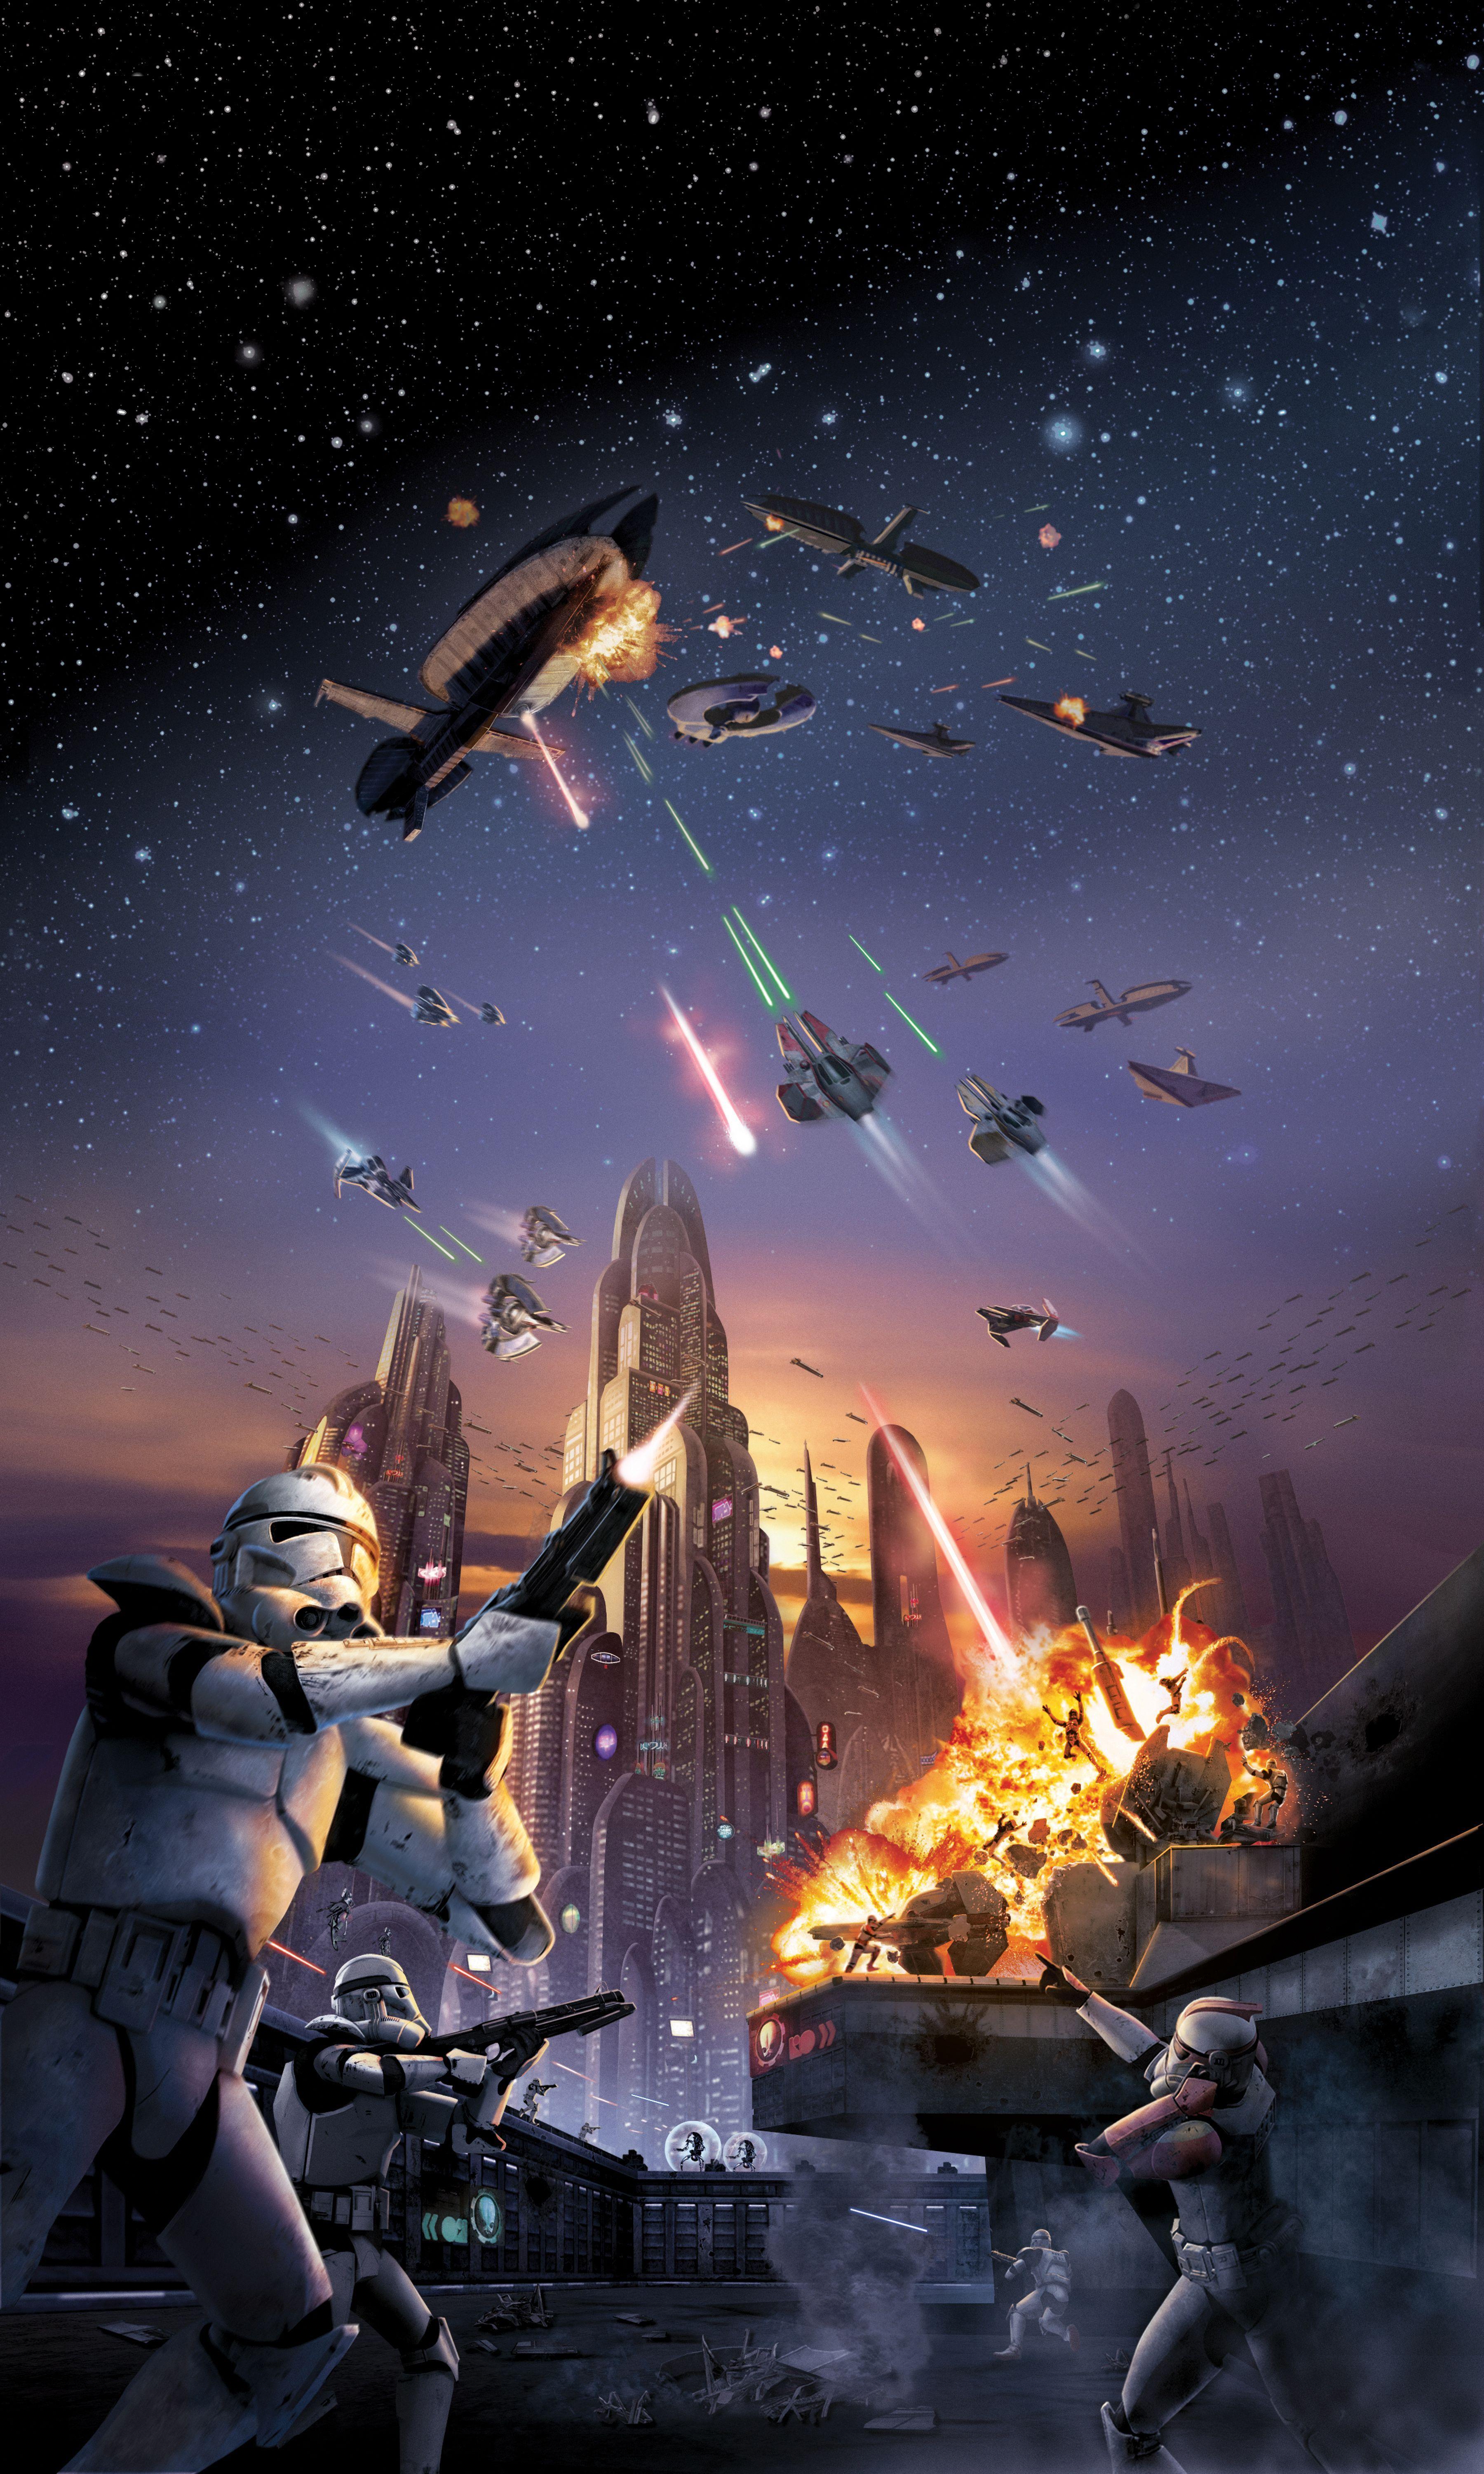 star wars background. Star wars background, Star wars wallpaper, Star wars art